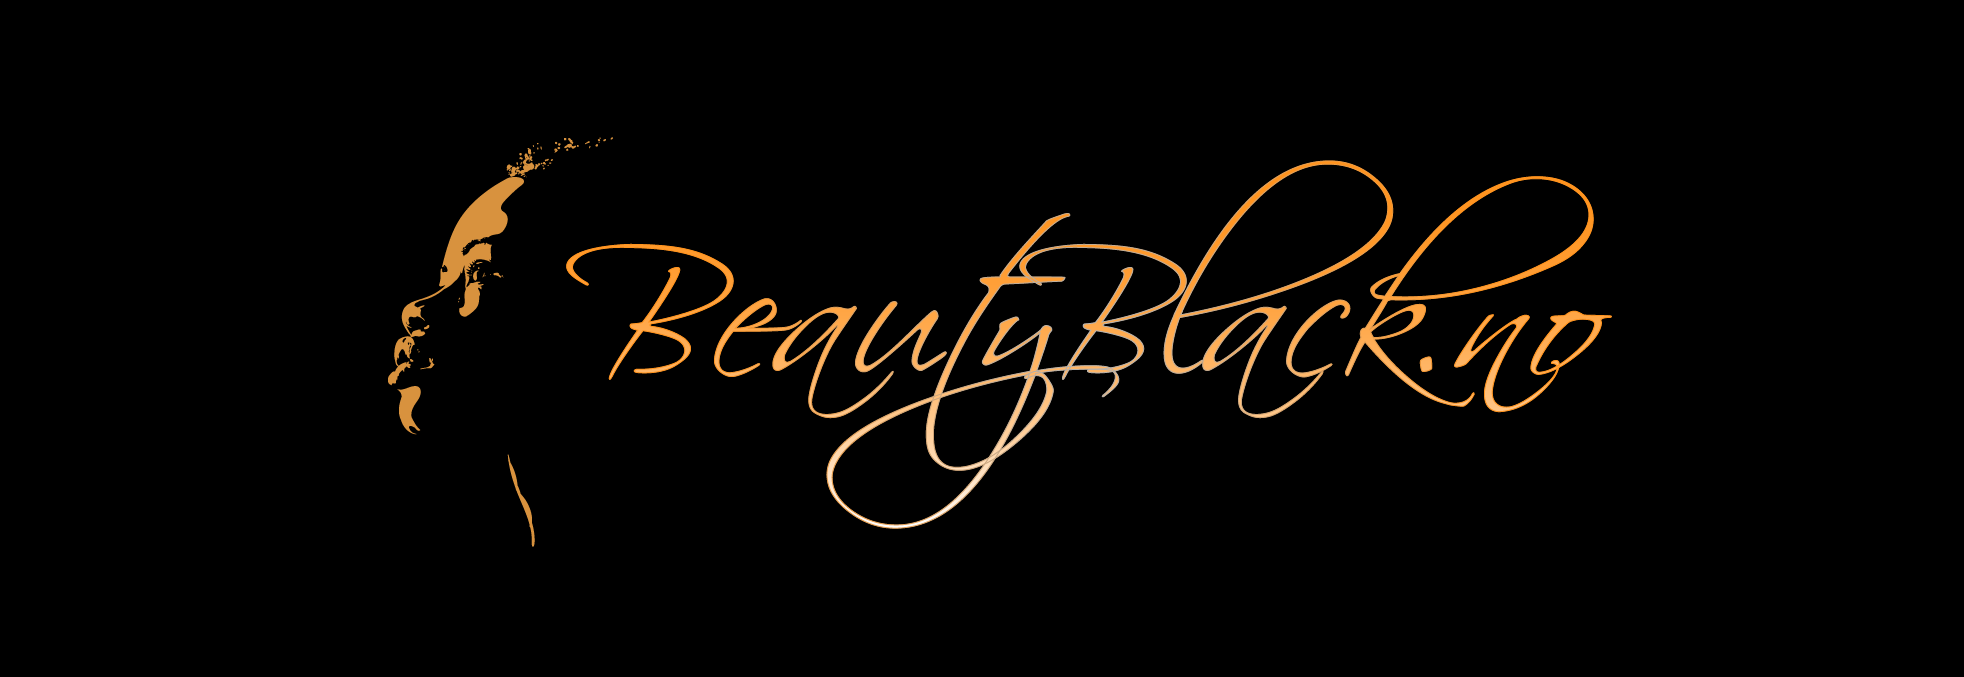 BeautyBlack.no